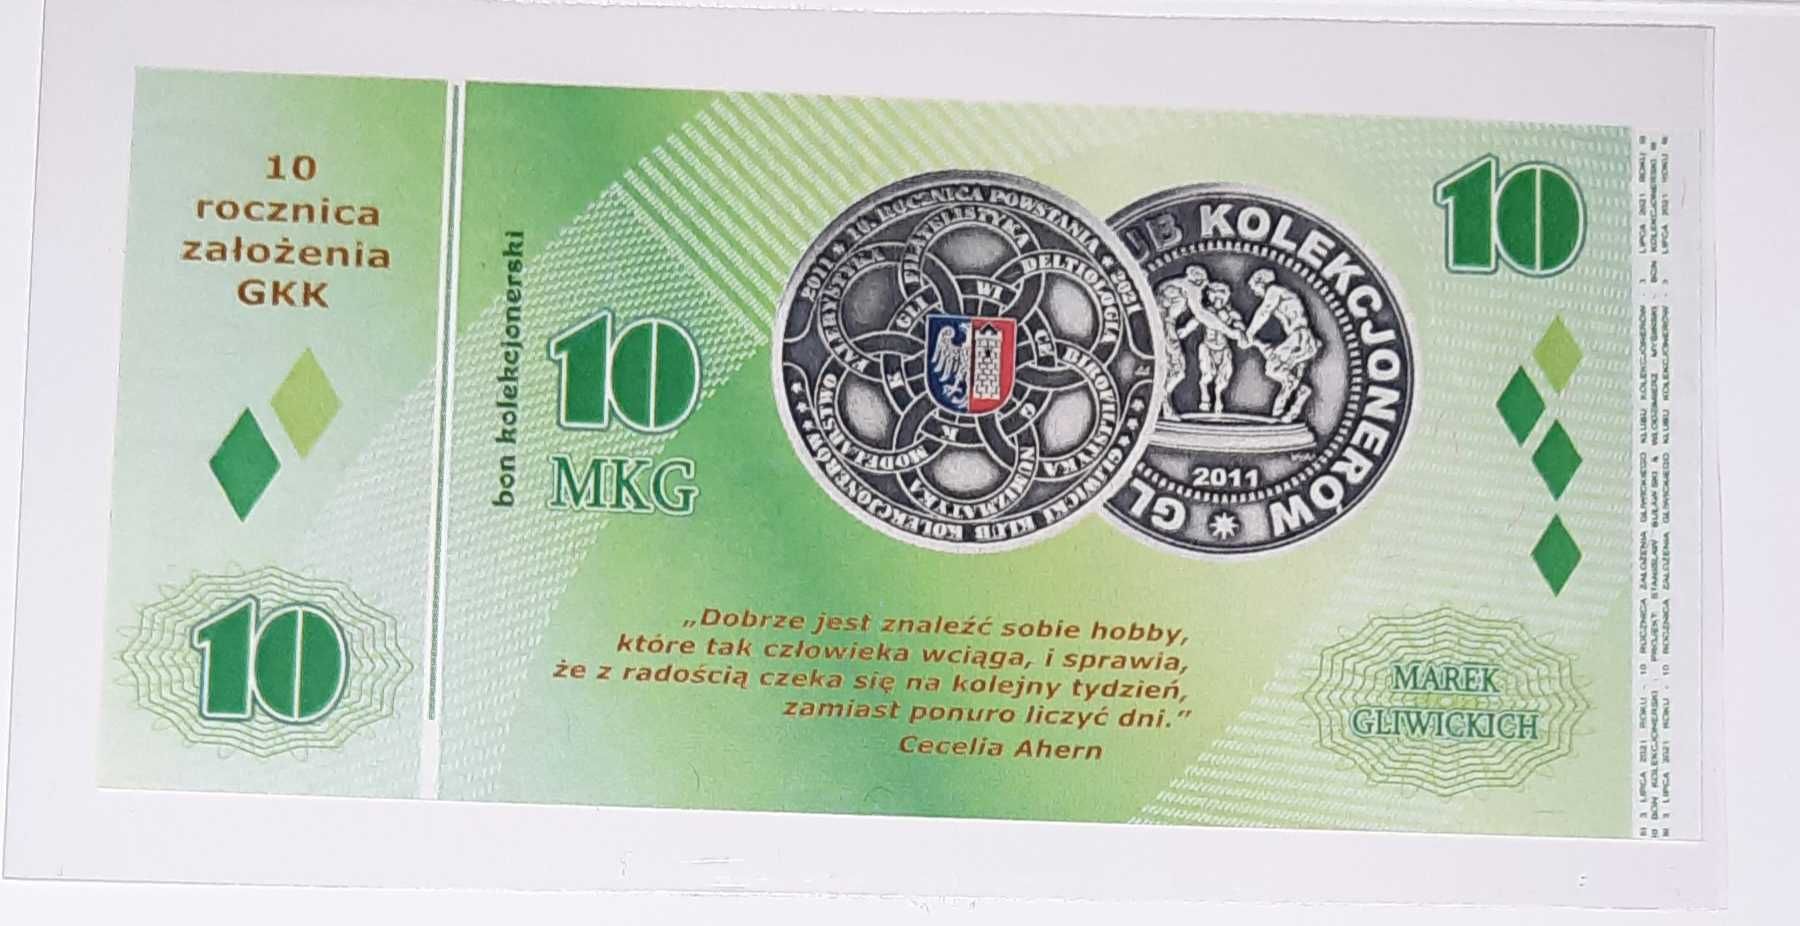 Banknot Bon kolekcionerski UNC 10 marek Gliwickich naklad 150 szt.